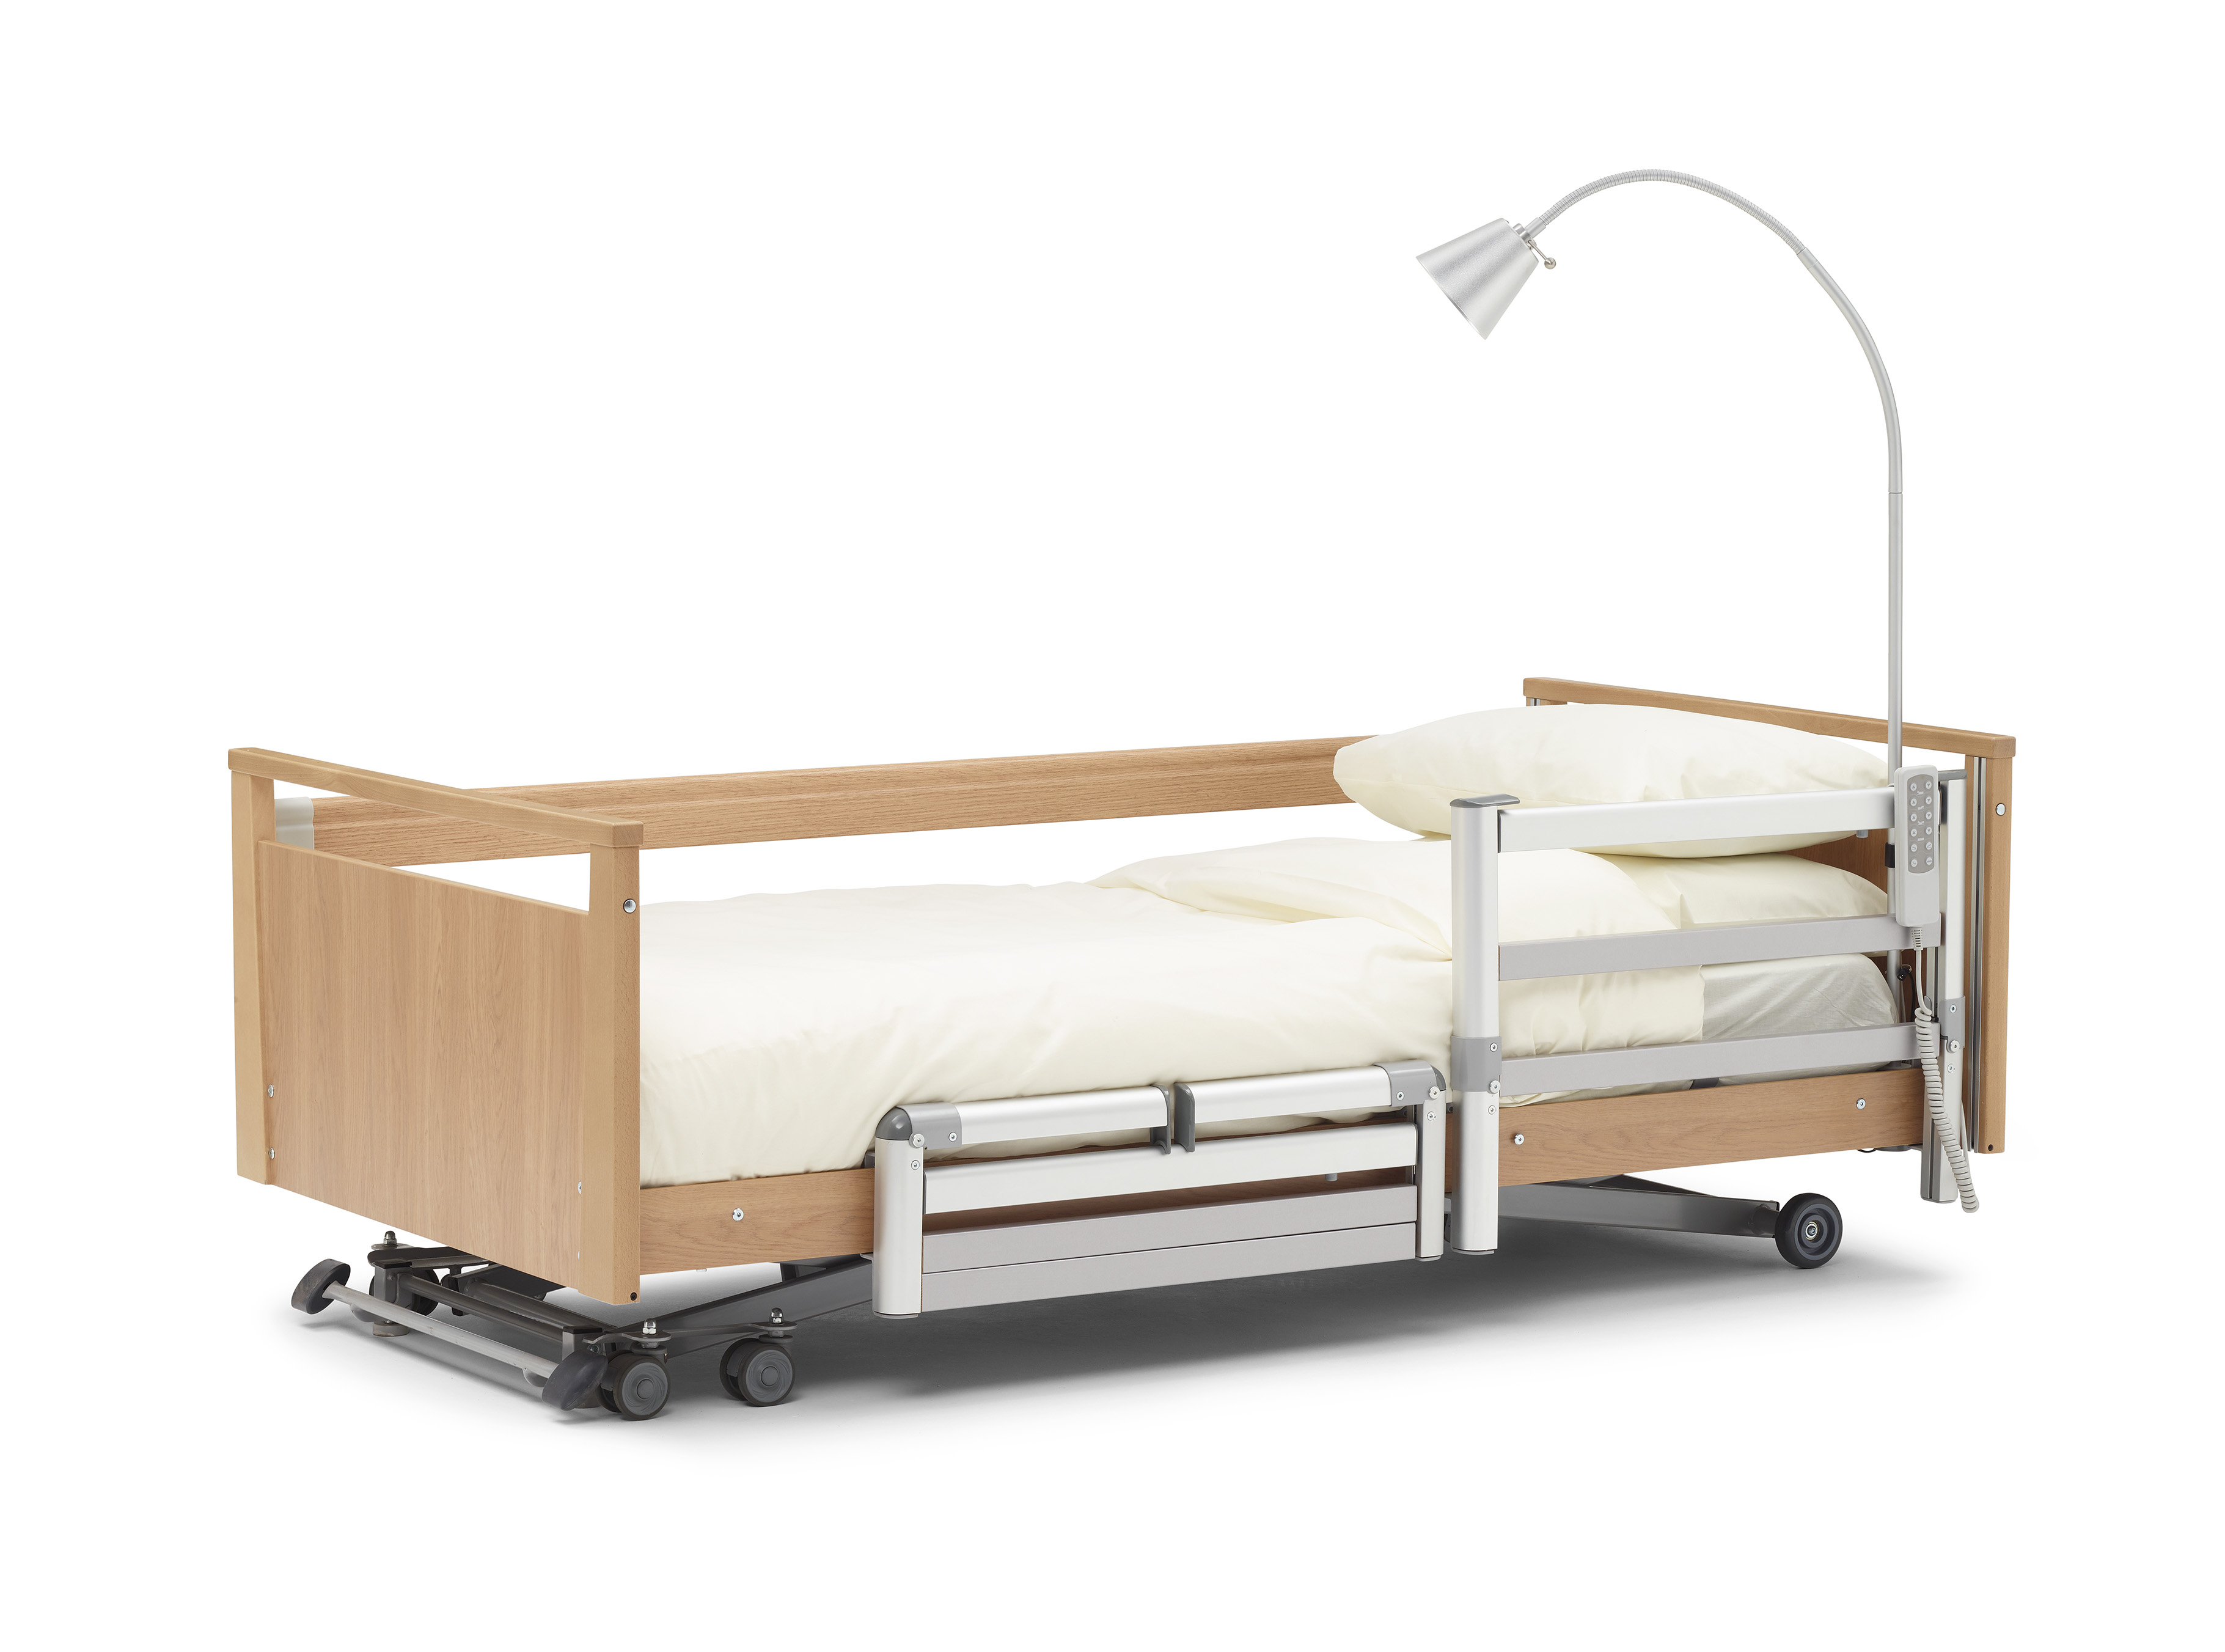 Impress 3 bed c/w Classic head/foot boards, side skirts and side rails
Finish: H1334 Light Sorano Oak (NEW)